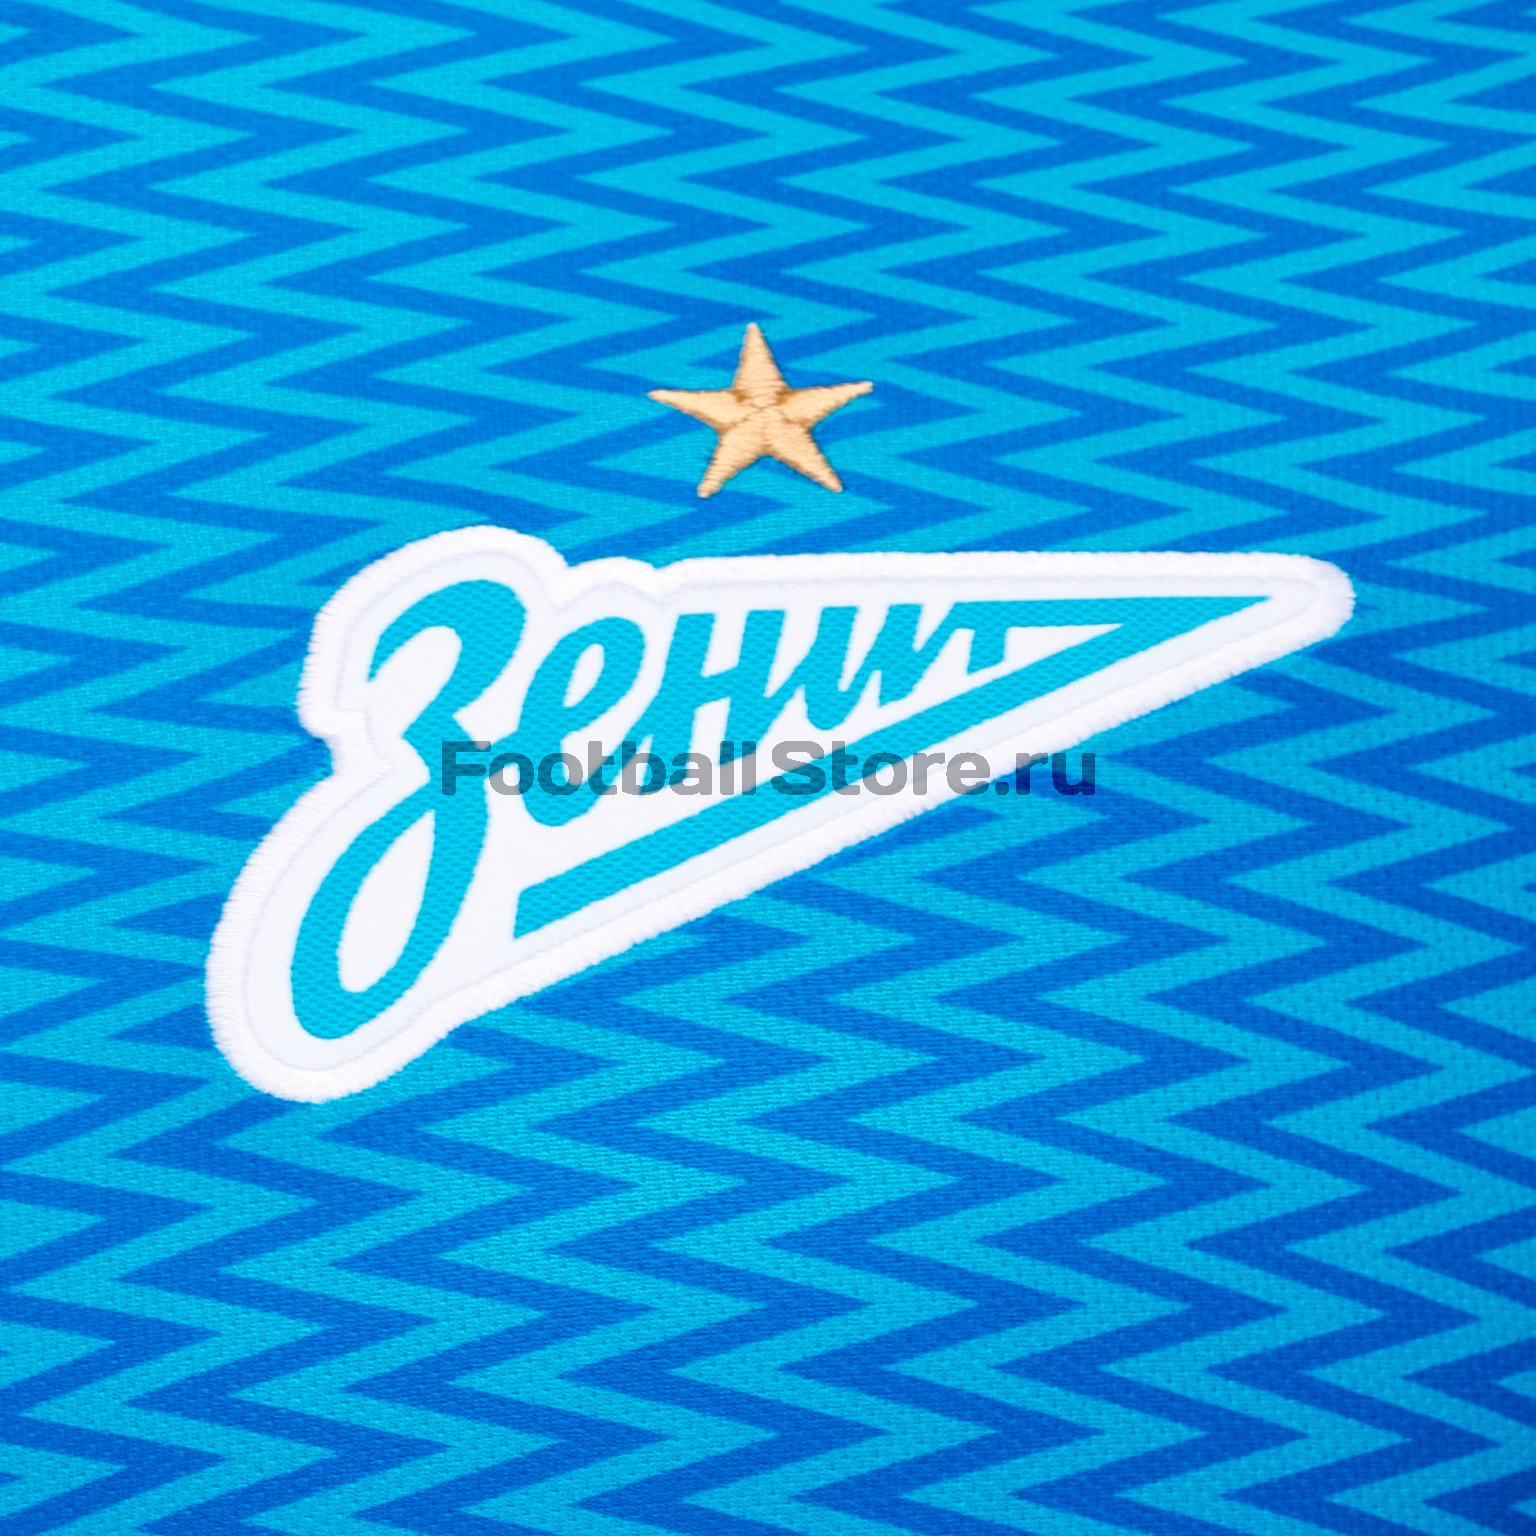 Оригинальная домашняя футболка Nike Zenit сезон 2018/19